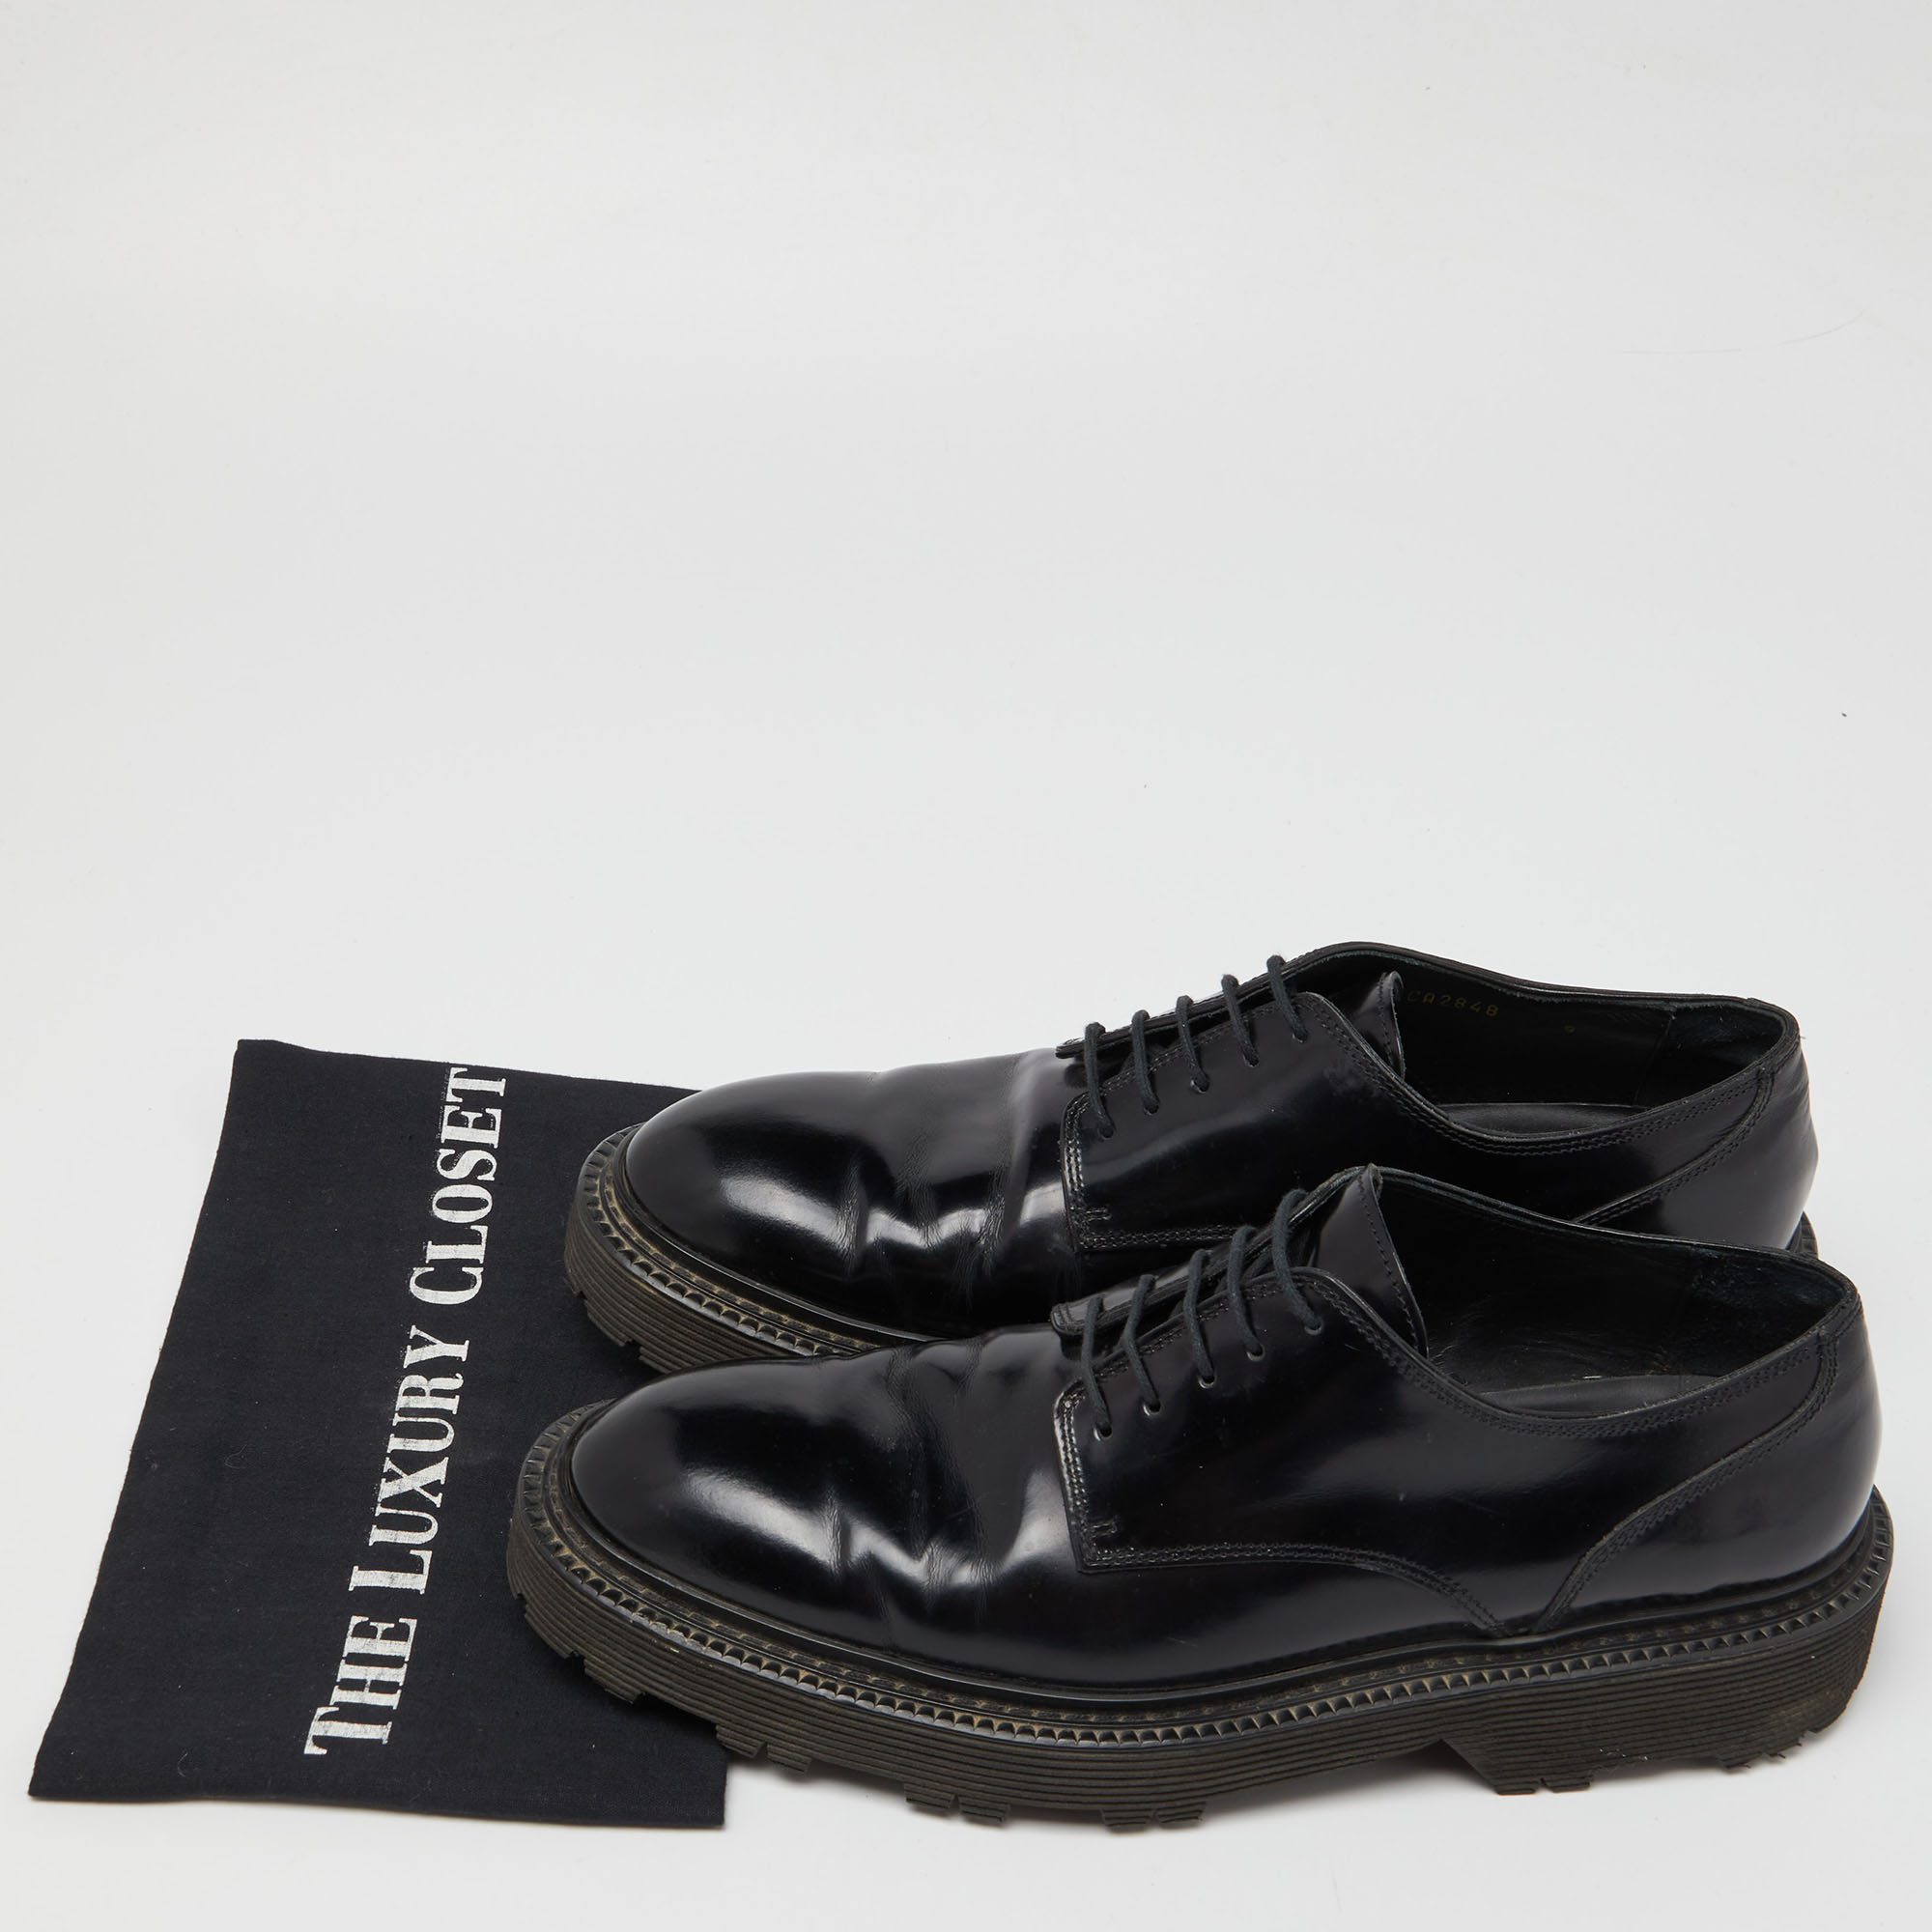 Dolce & Gabbana Black Patent Leather Lace Up Derby Size 43